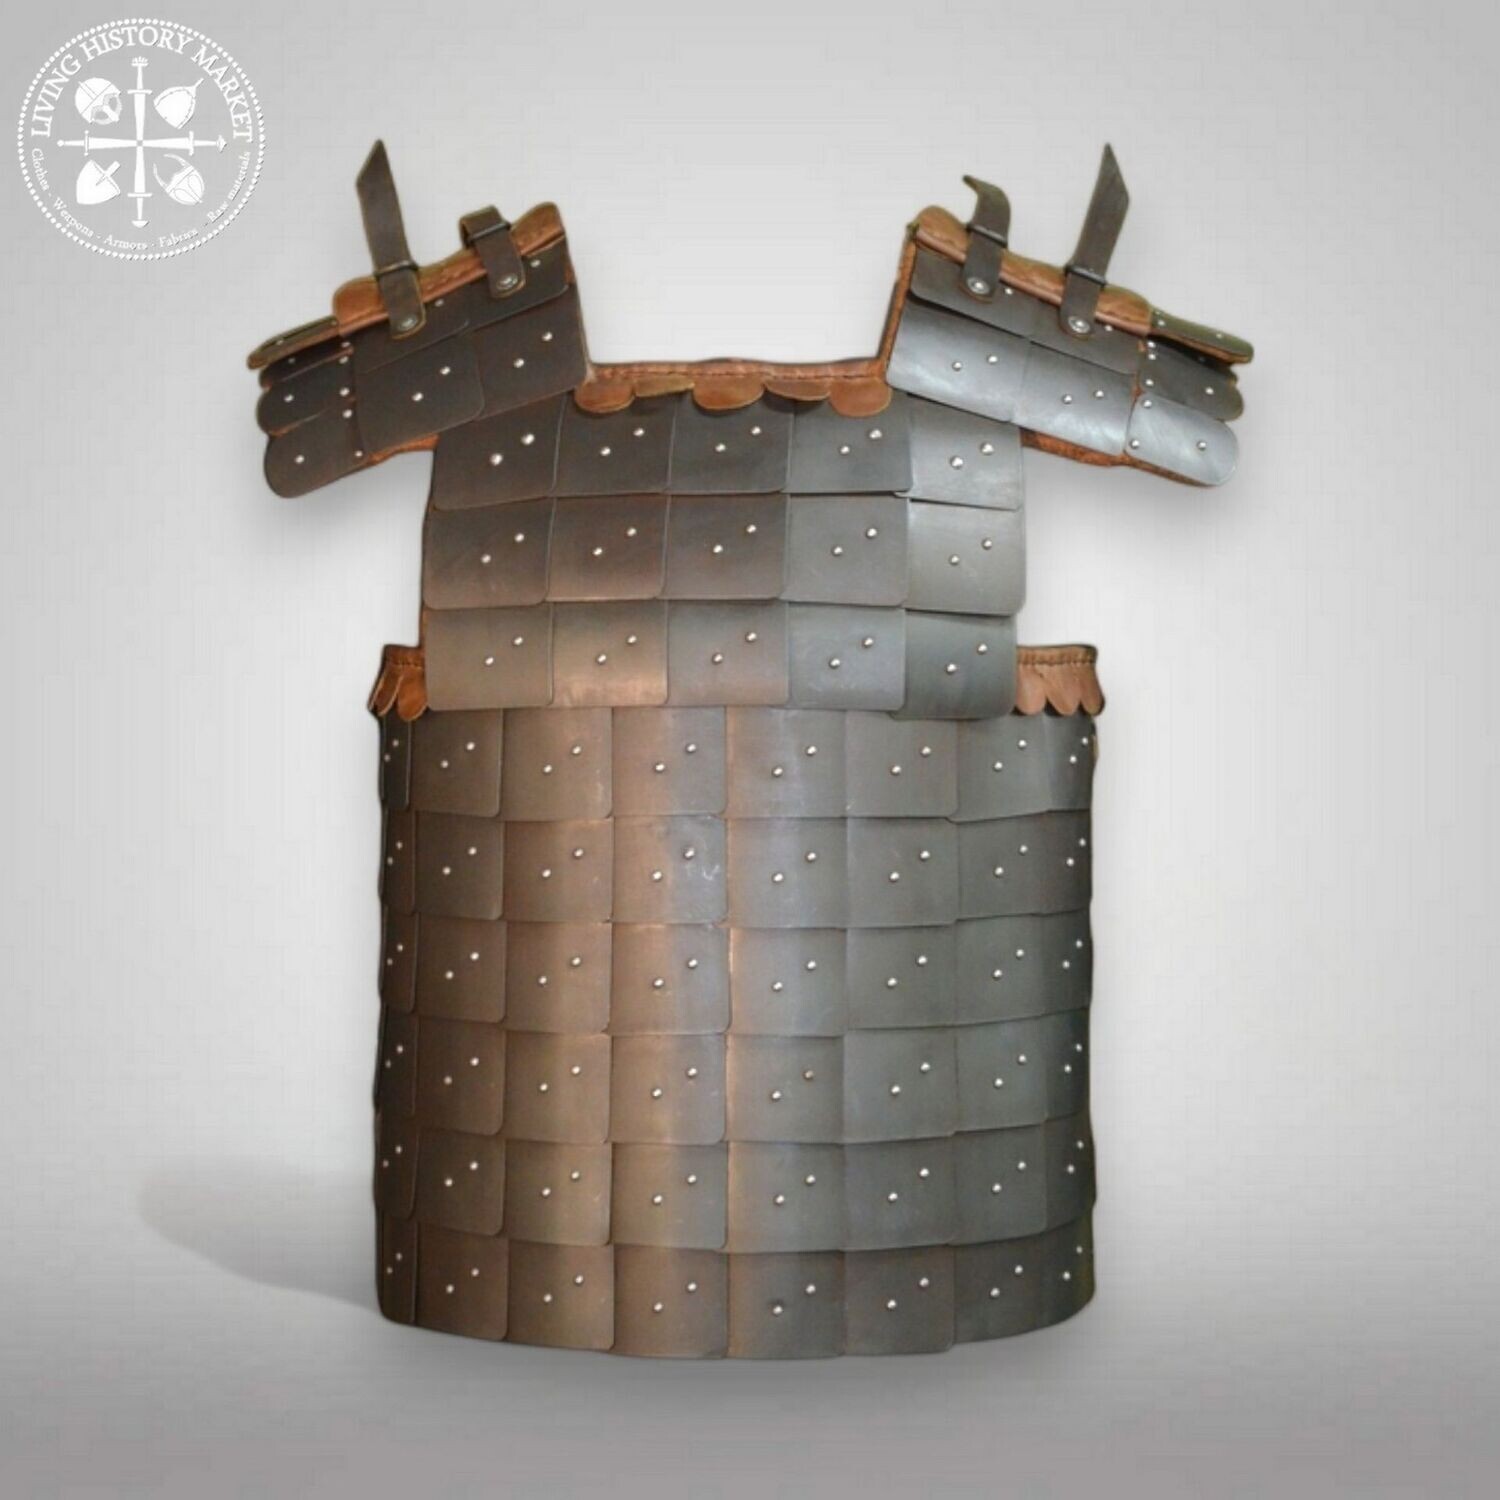 Dovmont Prince armor - Rus - 13-14 century